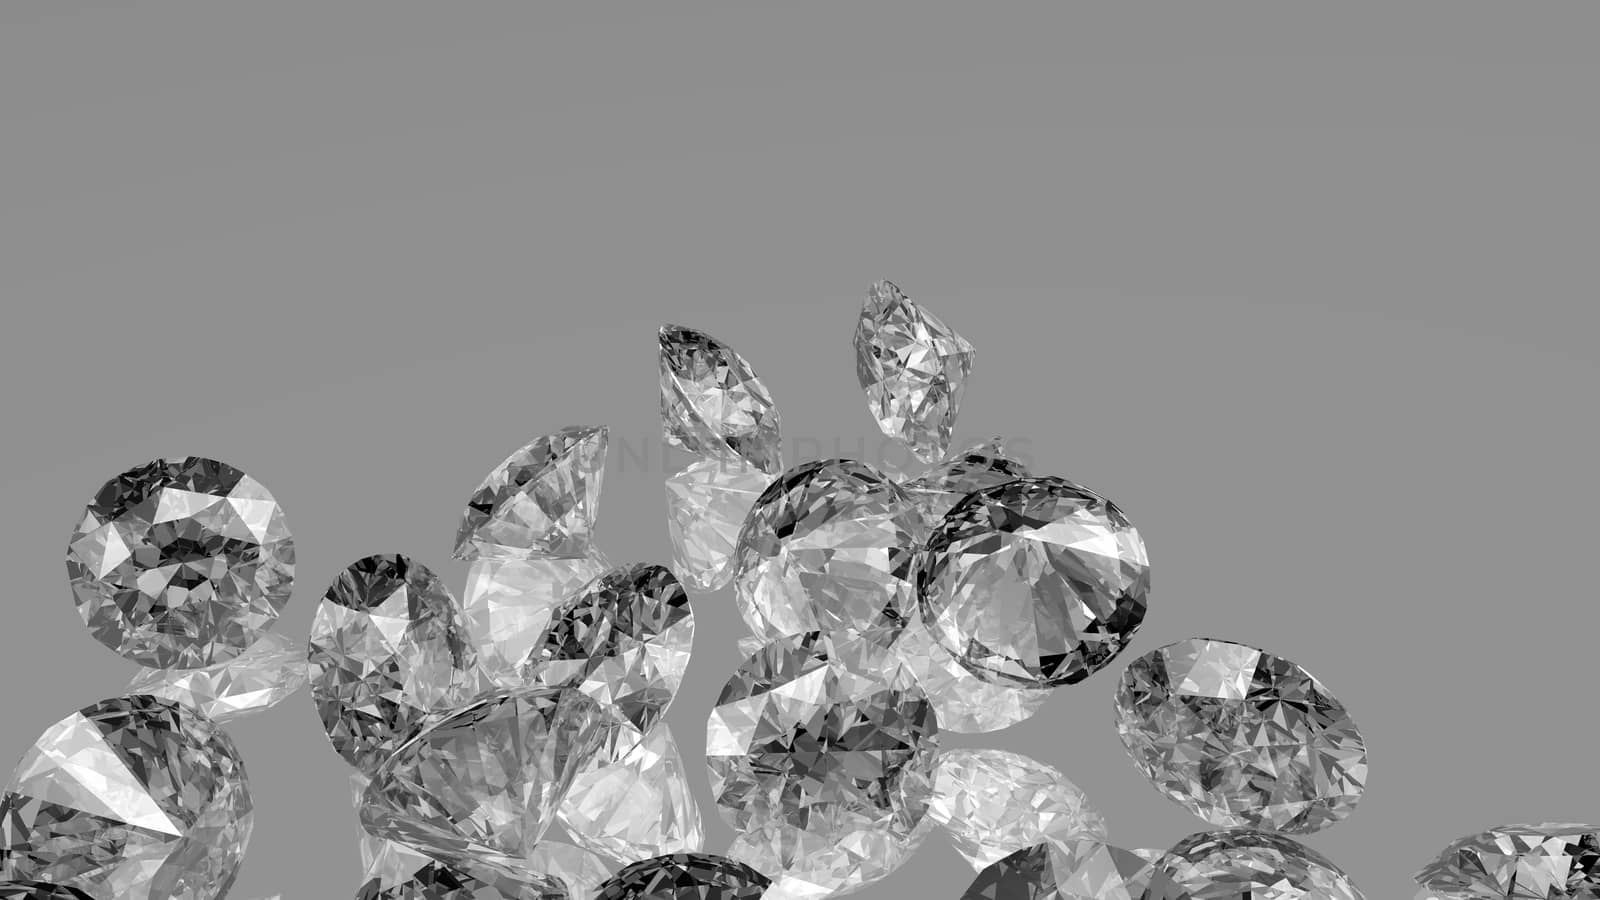 Collection of shiny gemstone diamond crystal on pinkish background. Jewelry background with diamonds.